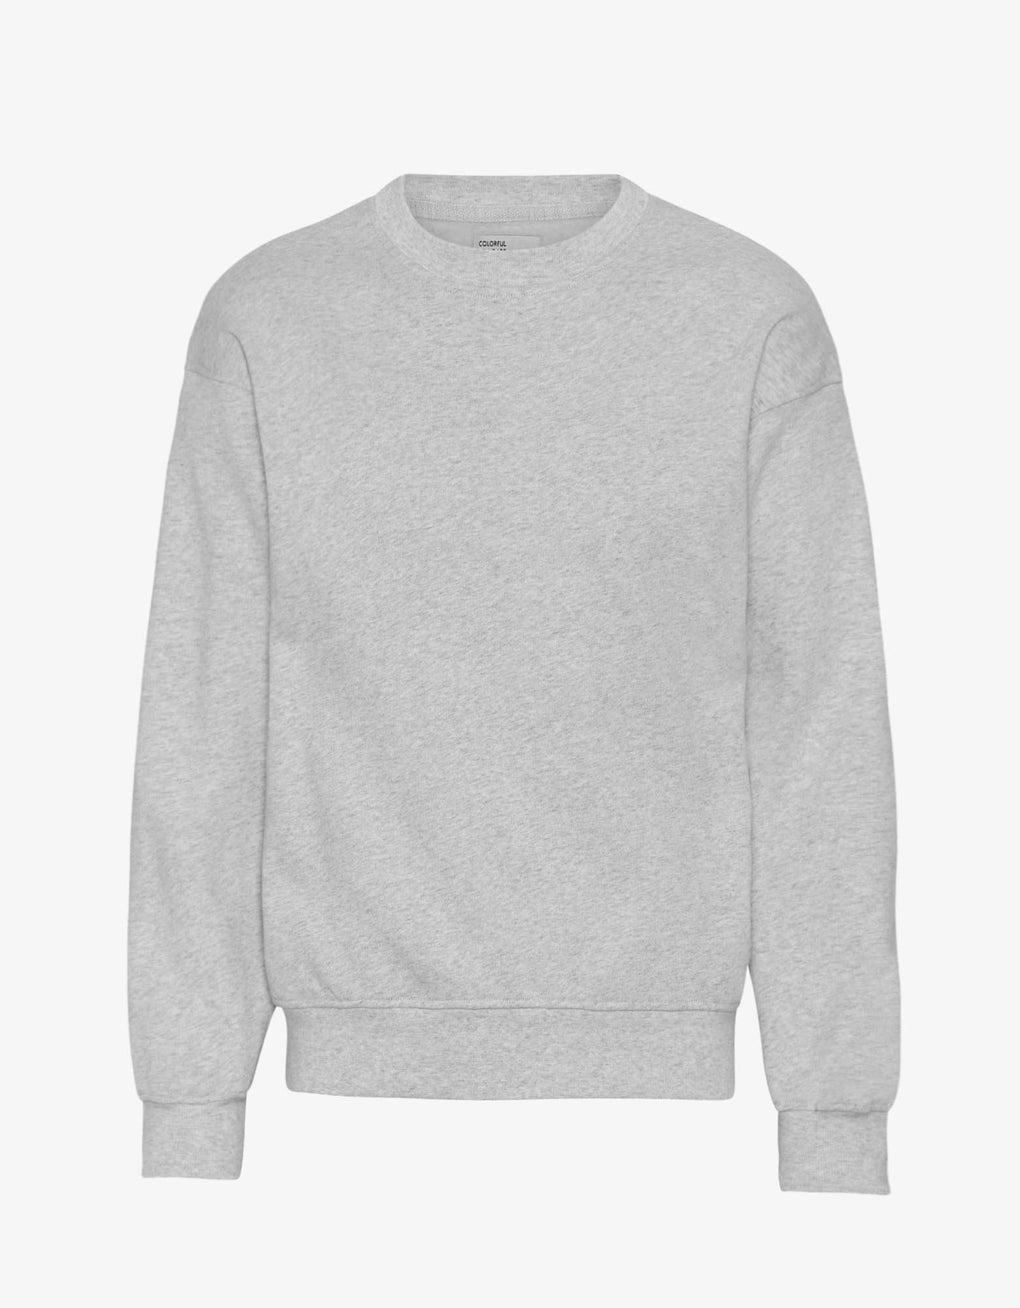 Organic oversized crew sweater in heather grey